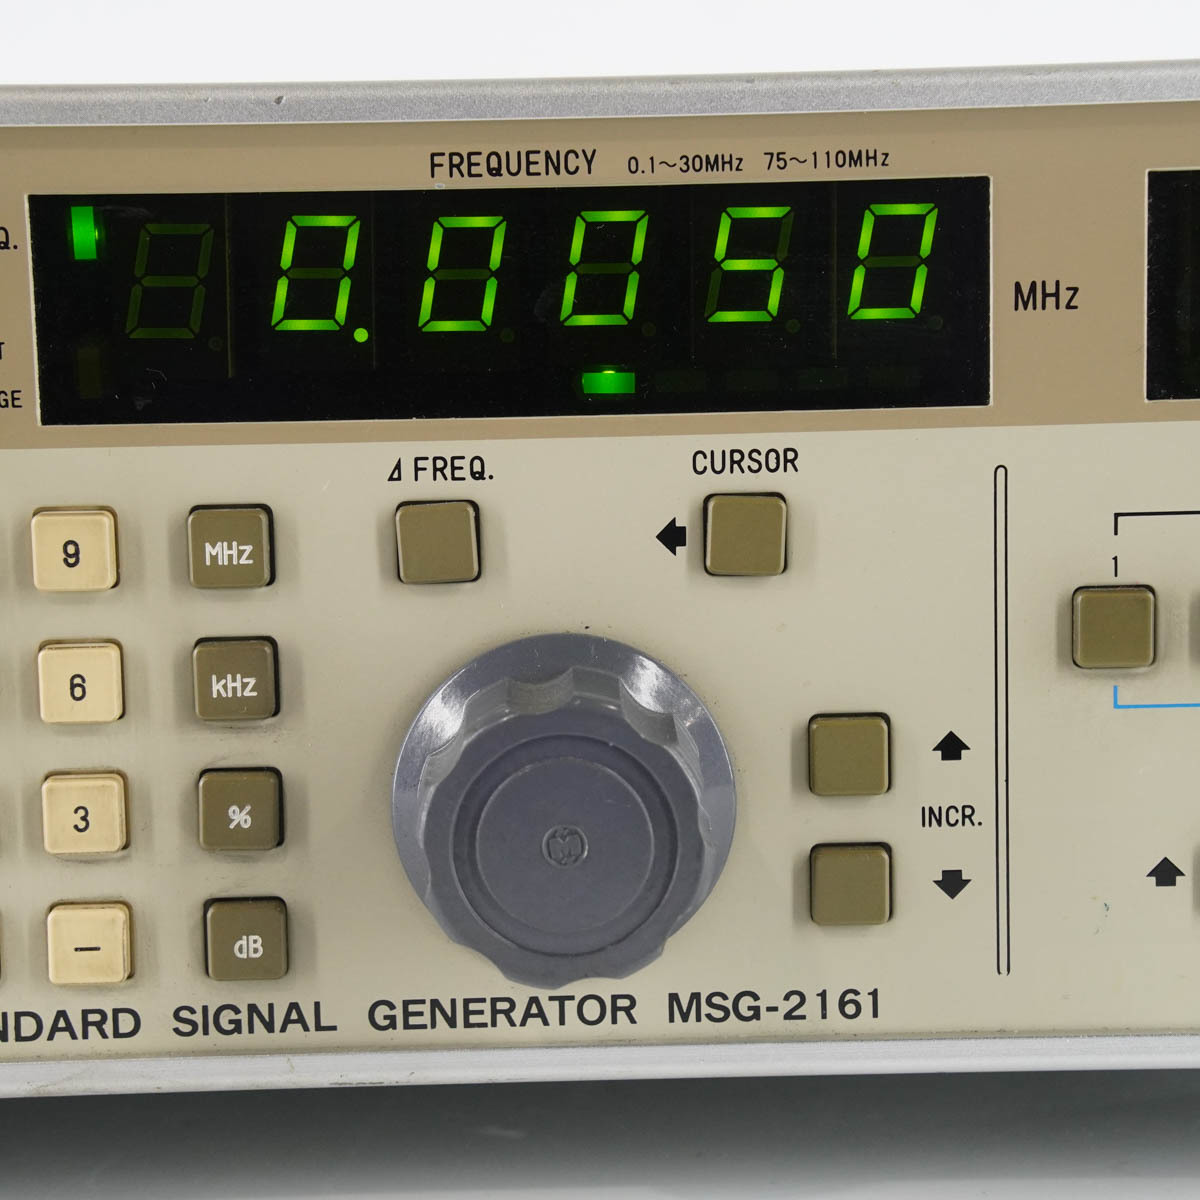 [DW] 8日保証 MSG-2161 MEGURO 目黒電波 FM STEREO/FM-AM STANDARD SIGNAL GENERATOR シグナルジェネレーター 信号発生器[05452-0200]_画像6